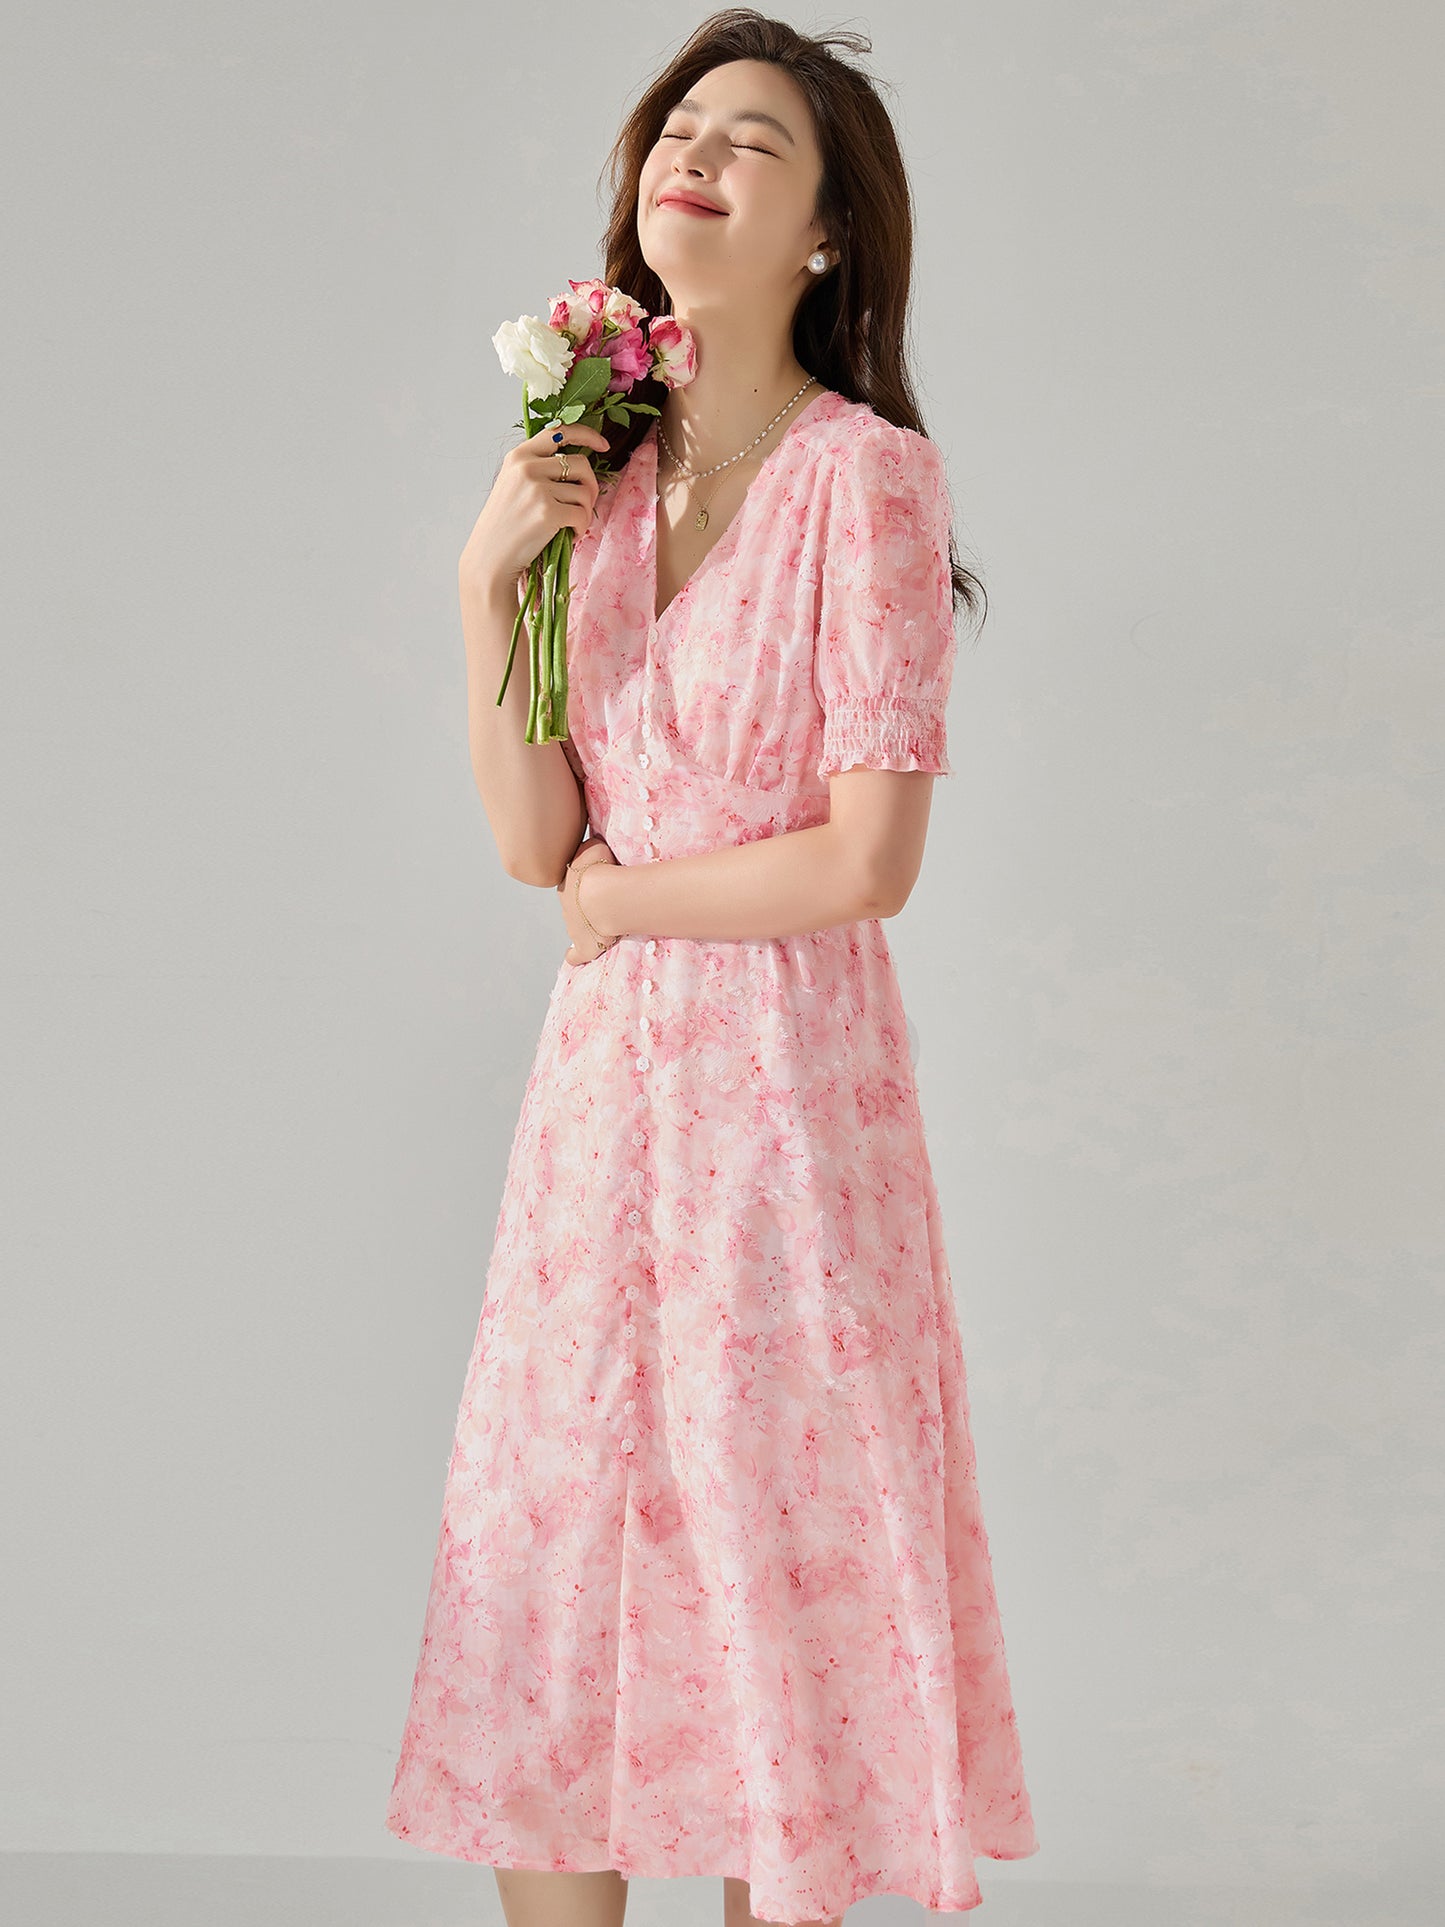 【C&M】Pink Printed Dress